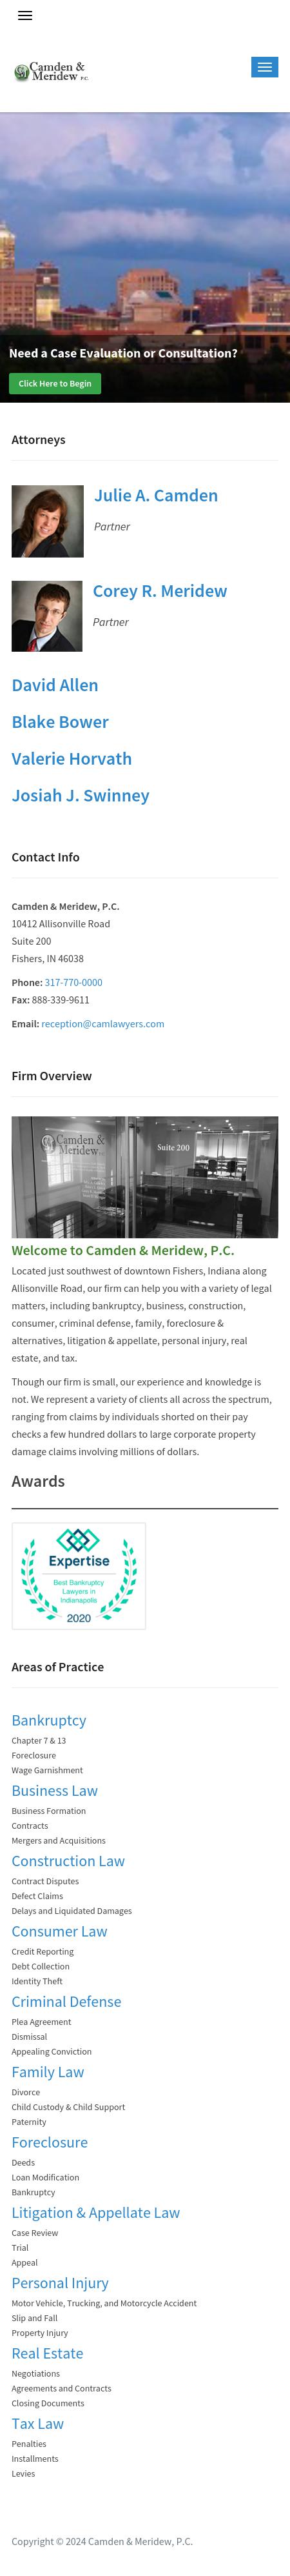 Camden & Meridew PC - Fishers IN Lawyers